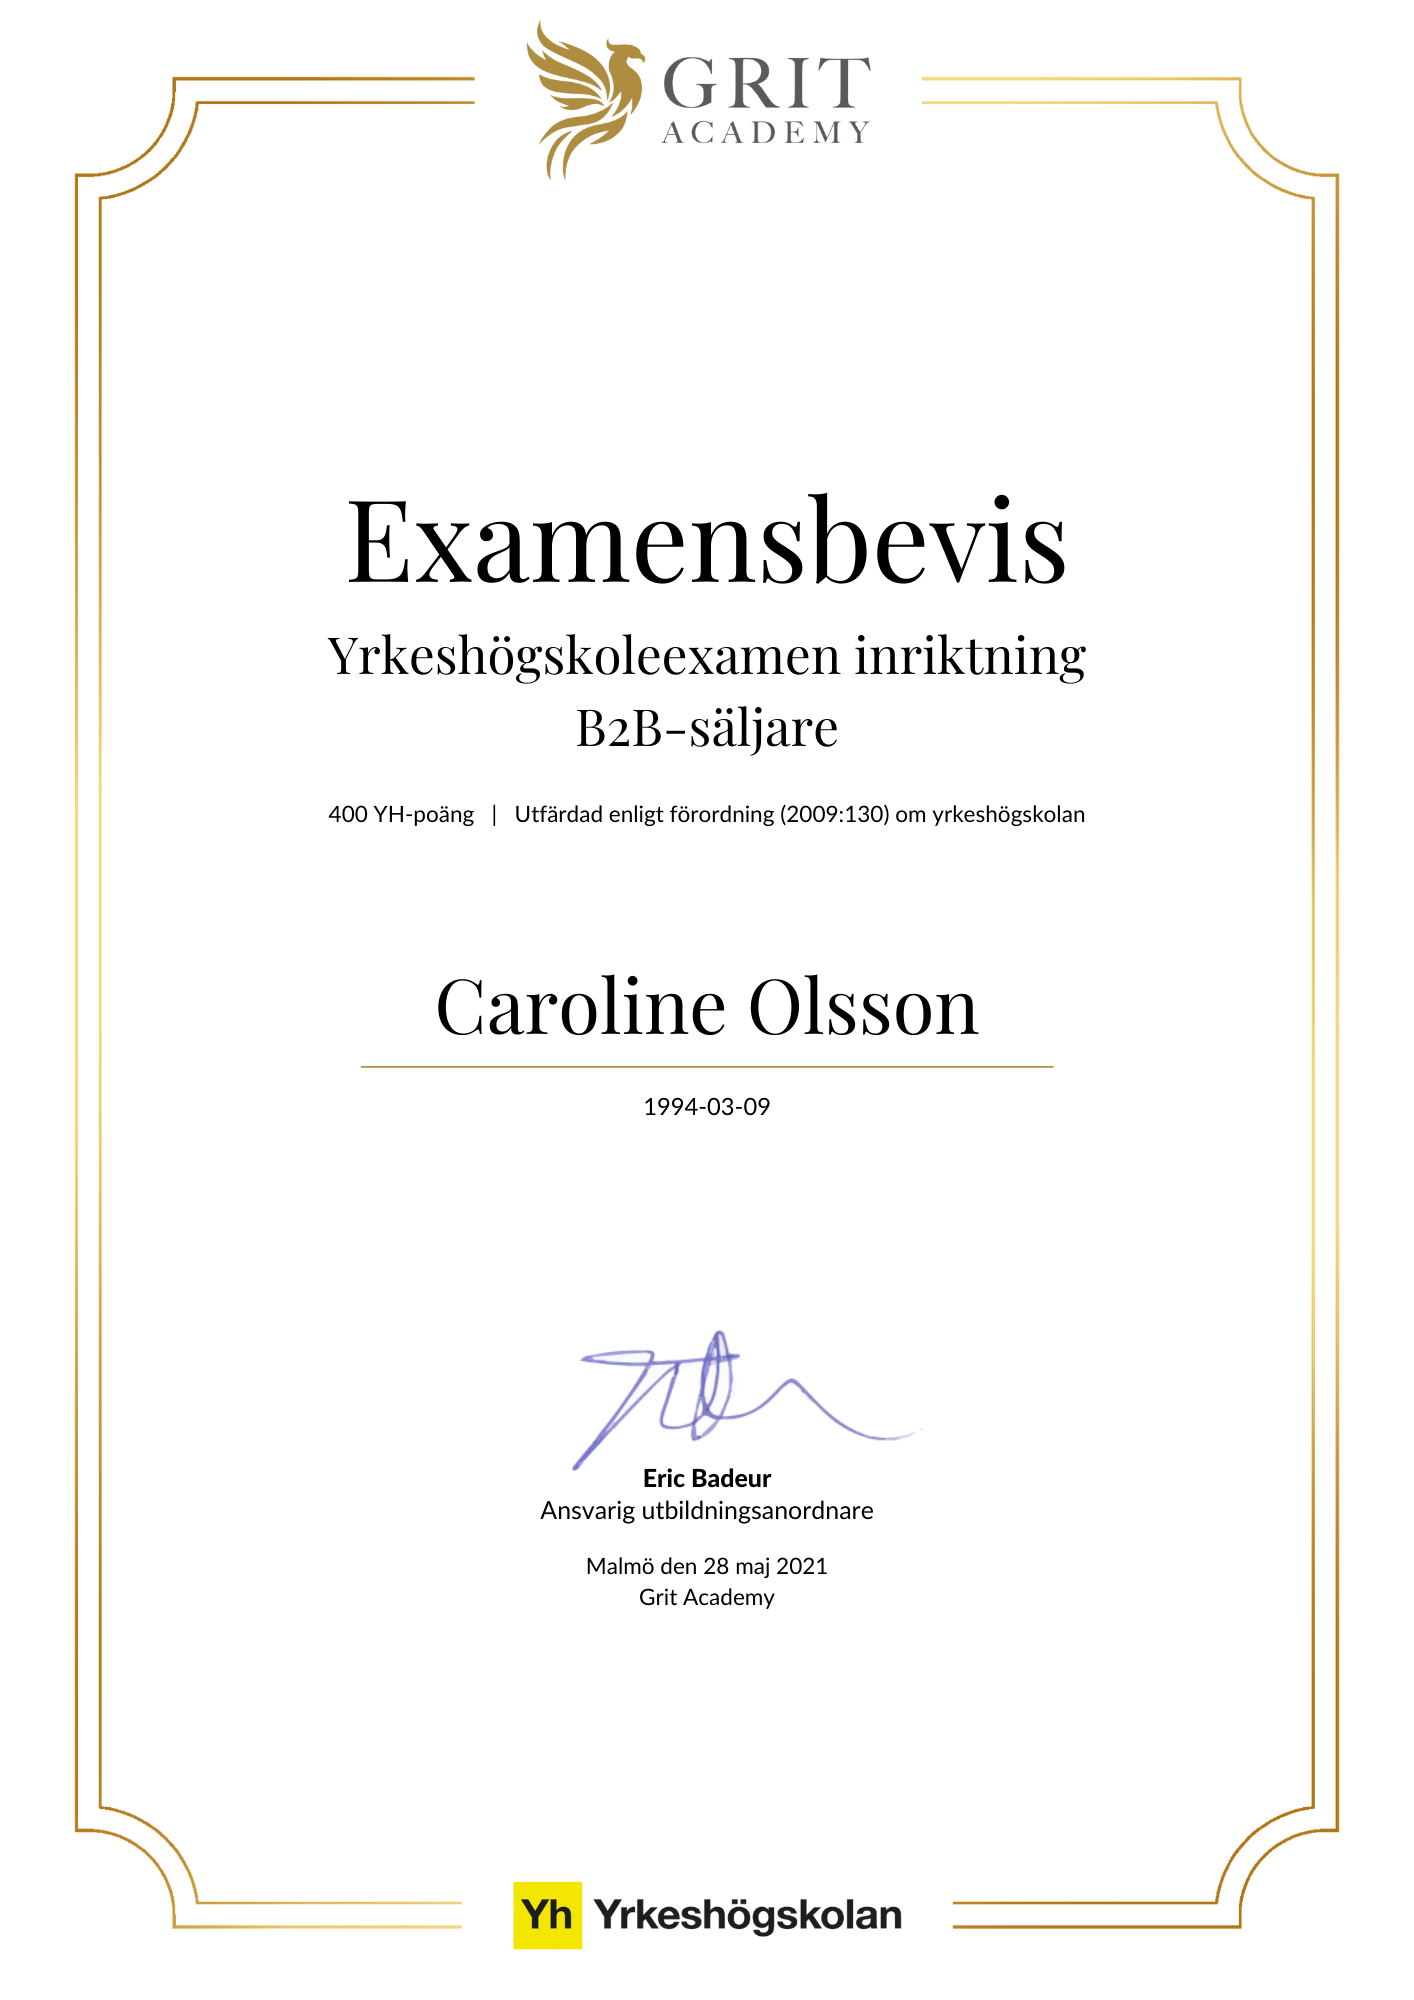 Examensbevis Caroline Olsson - 1